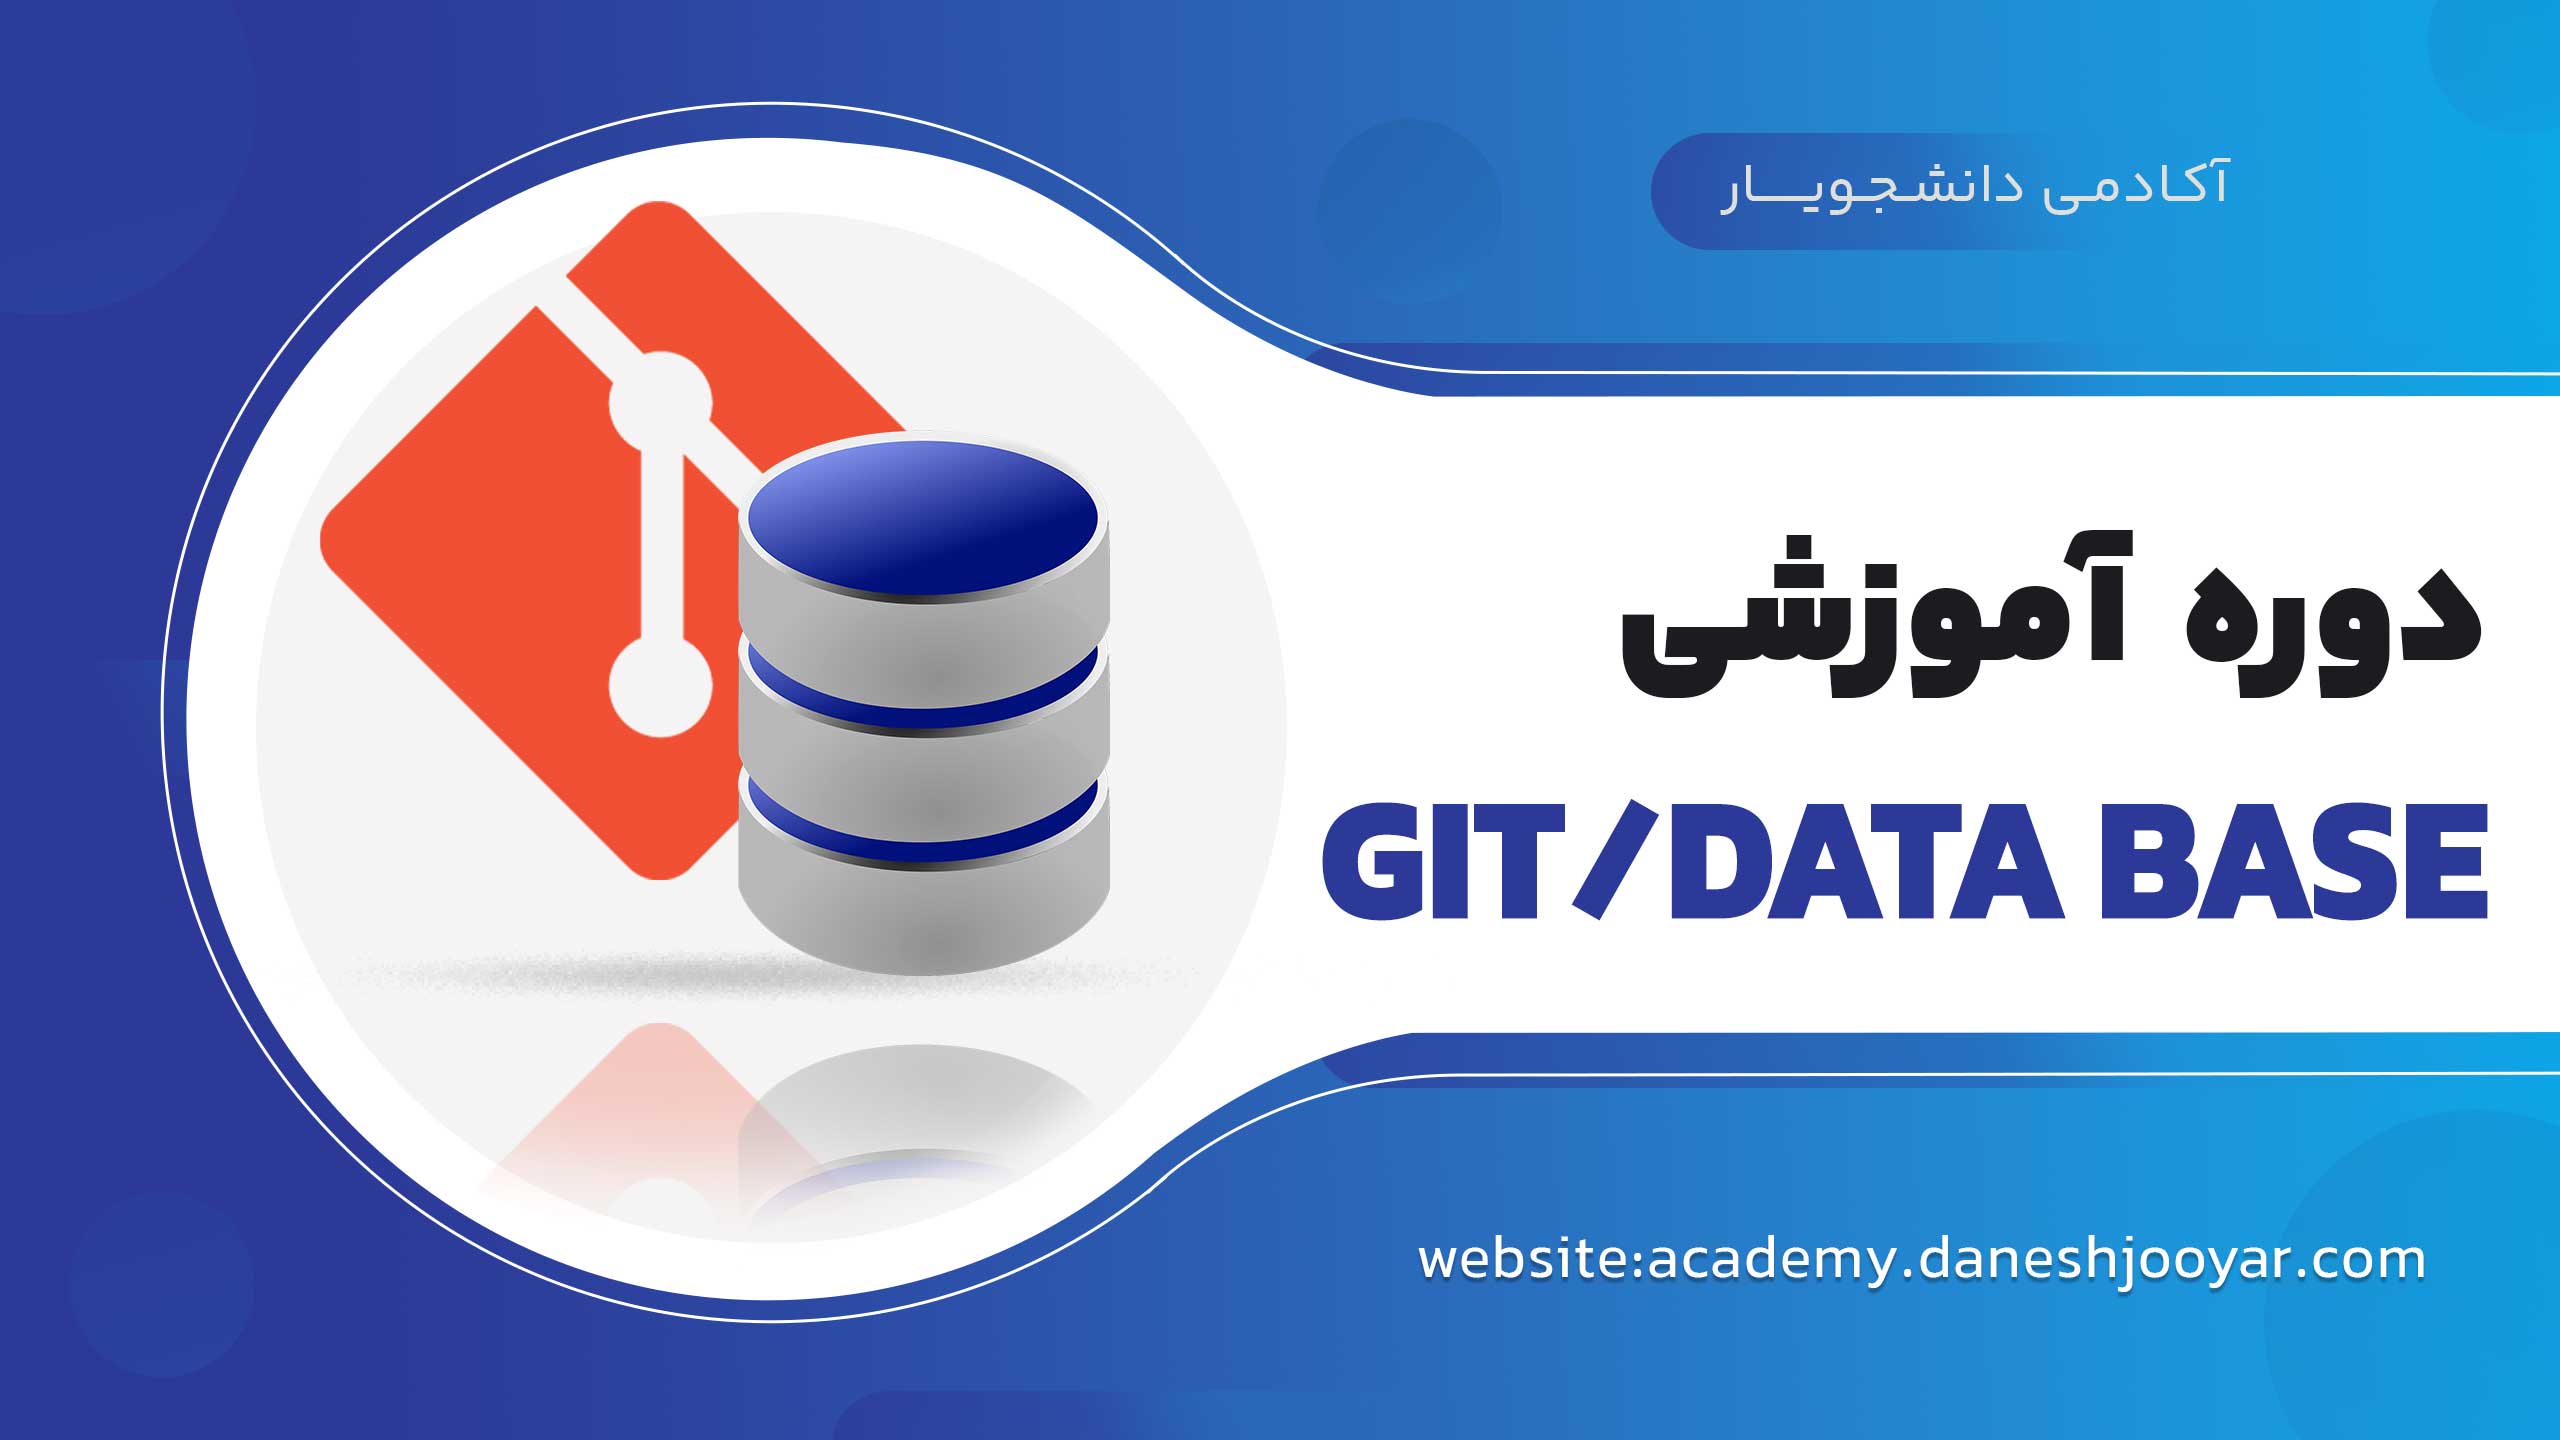 GIT/DATA BASE